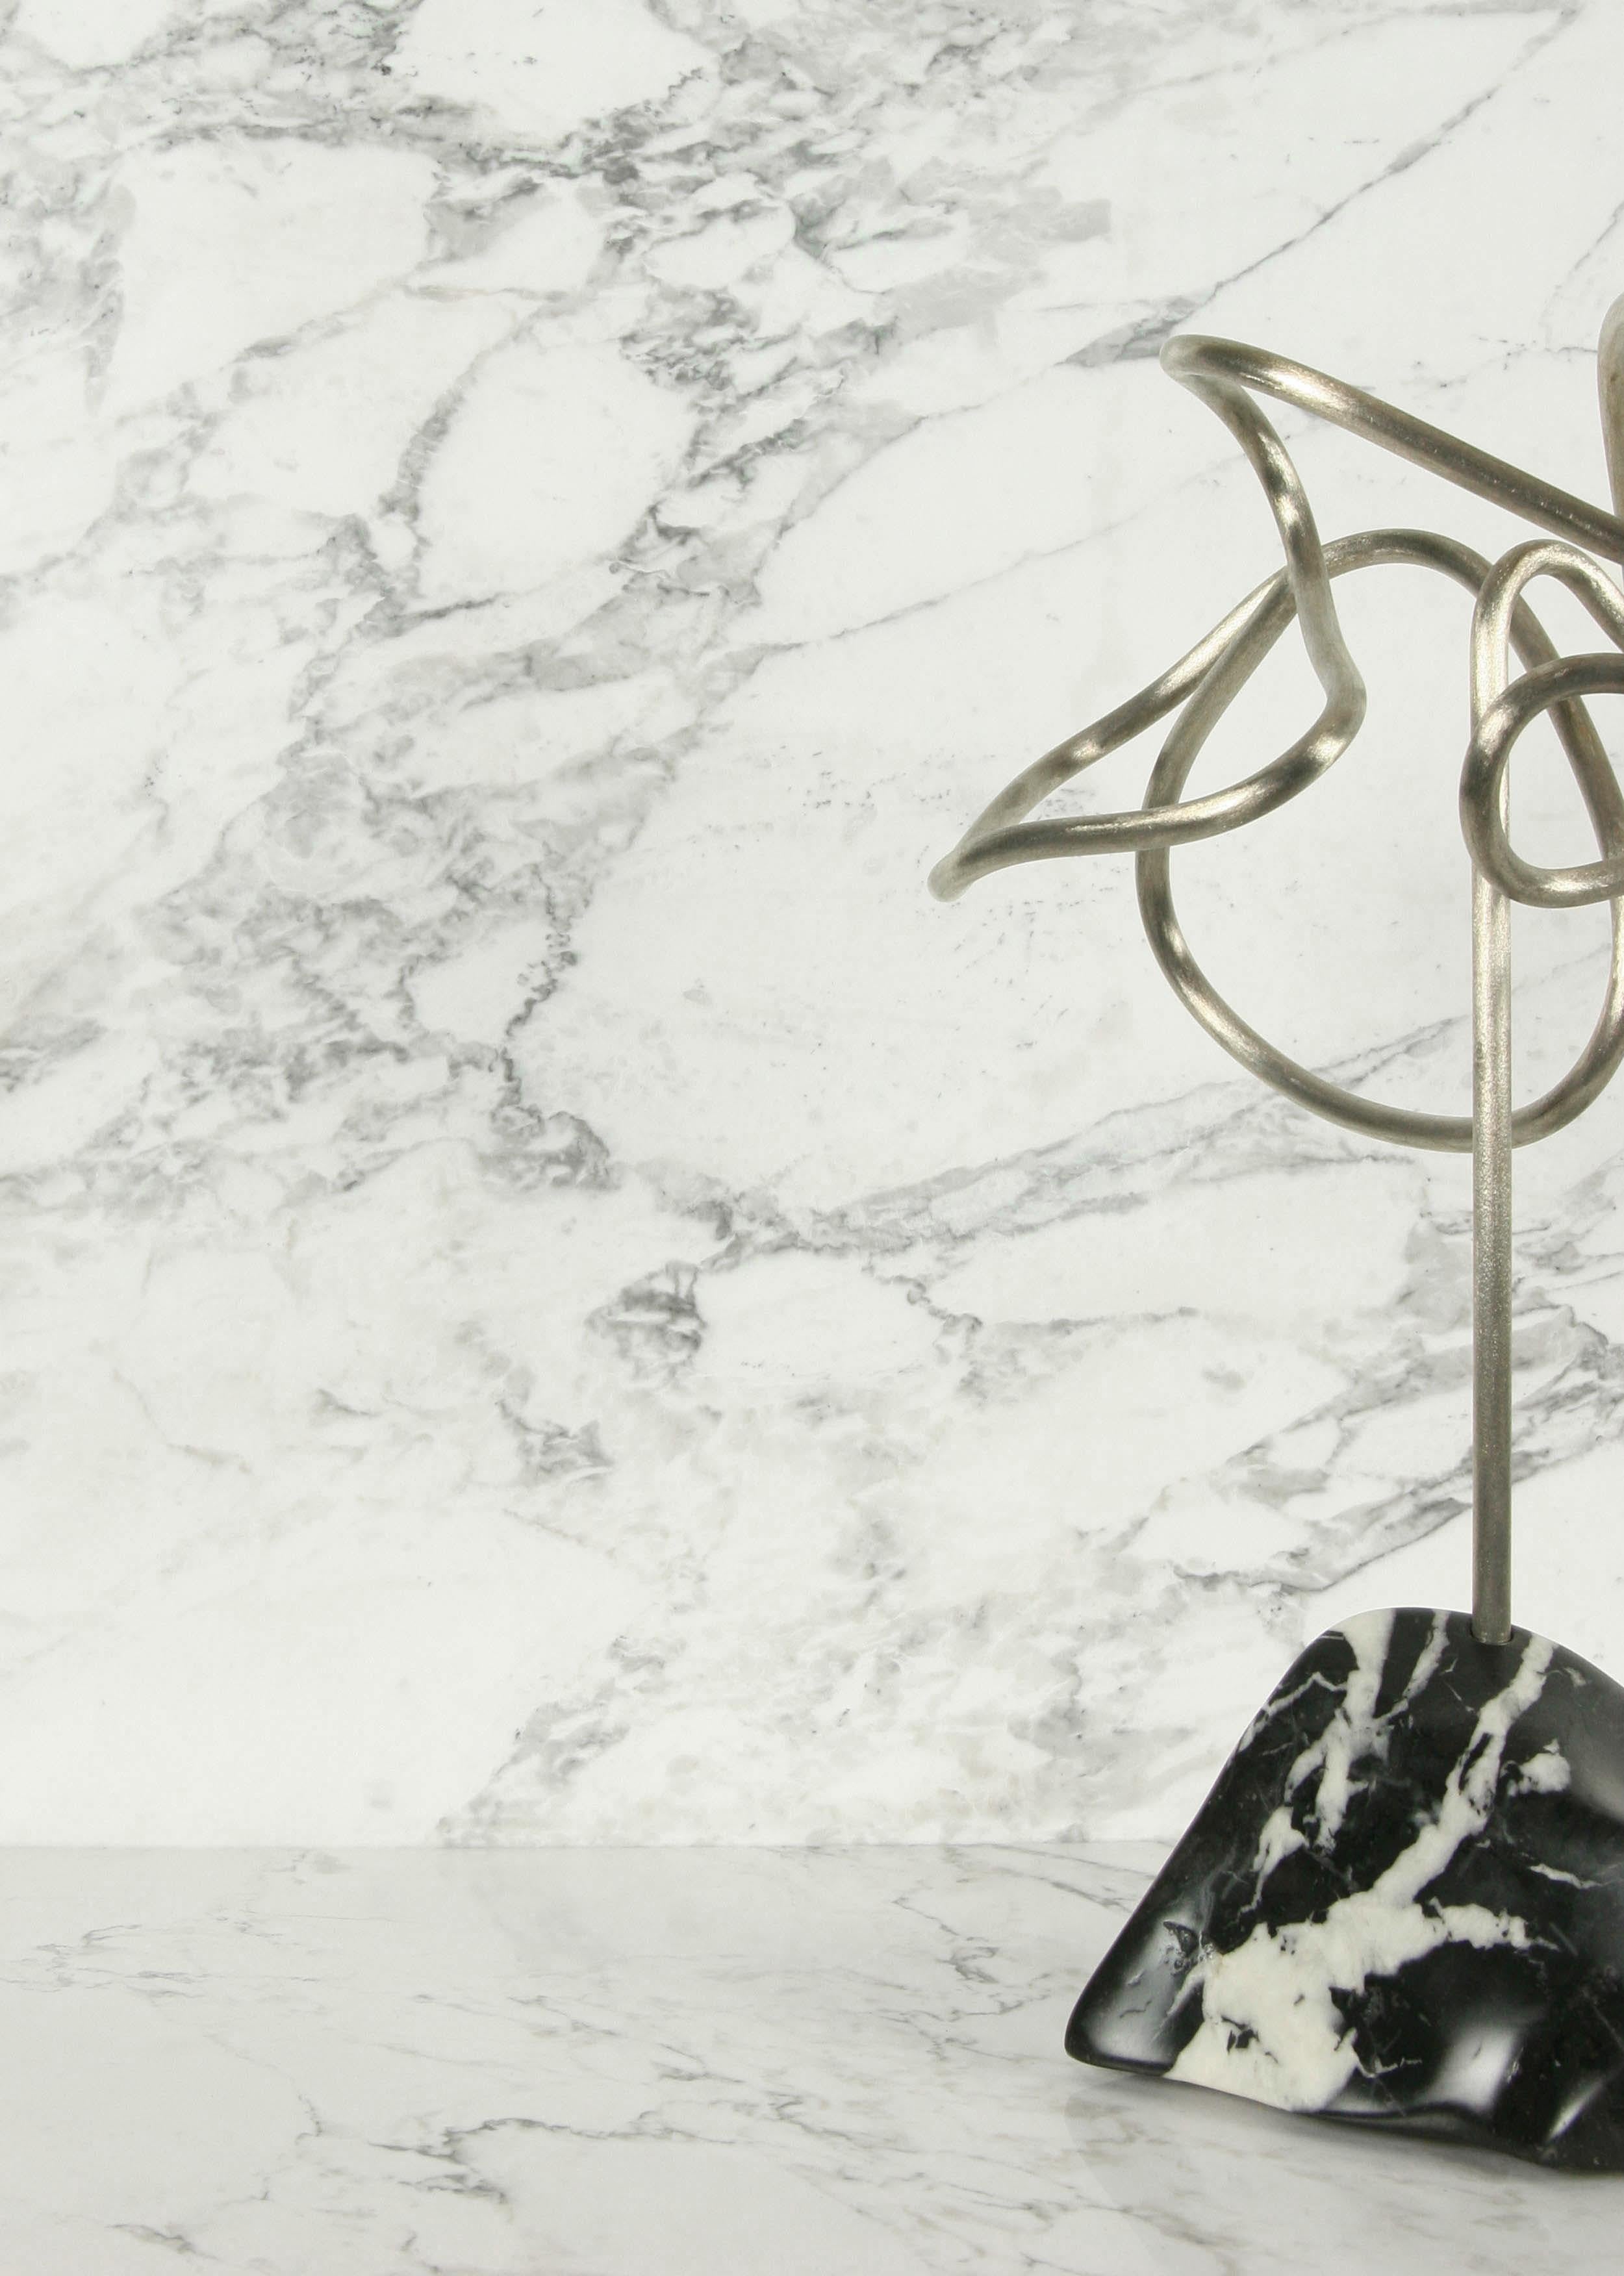 Metalwork SEK-8 Tree Sculpture of Streaked Silvered Brass and Marble